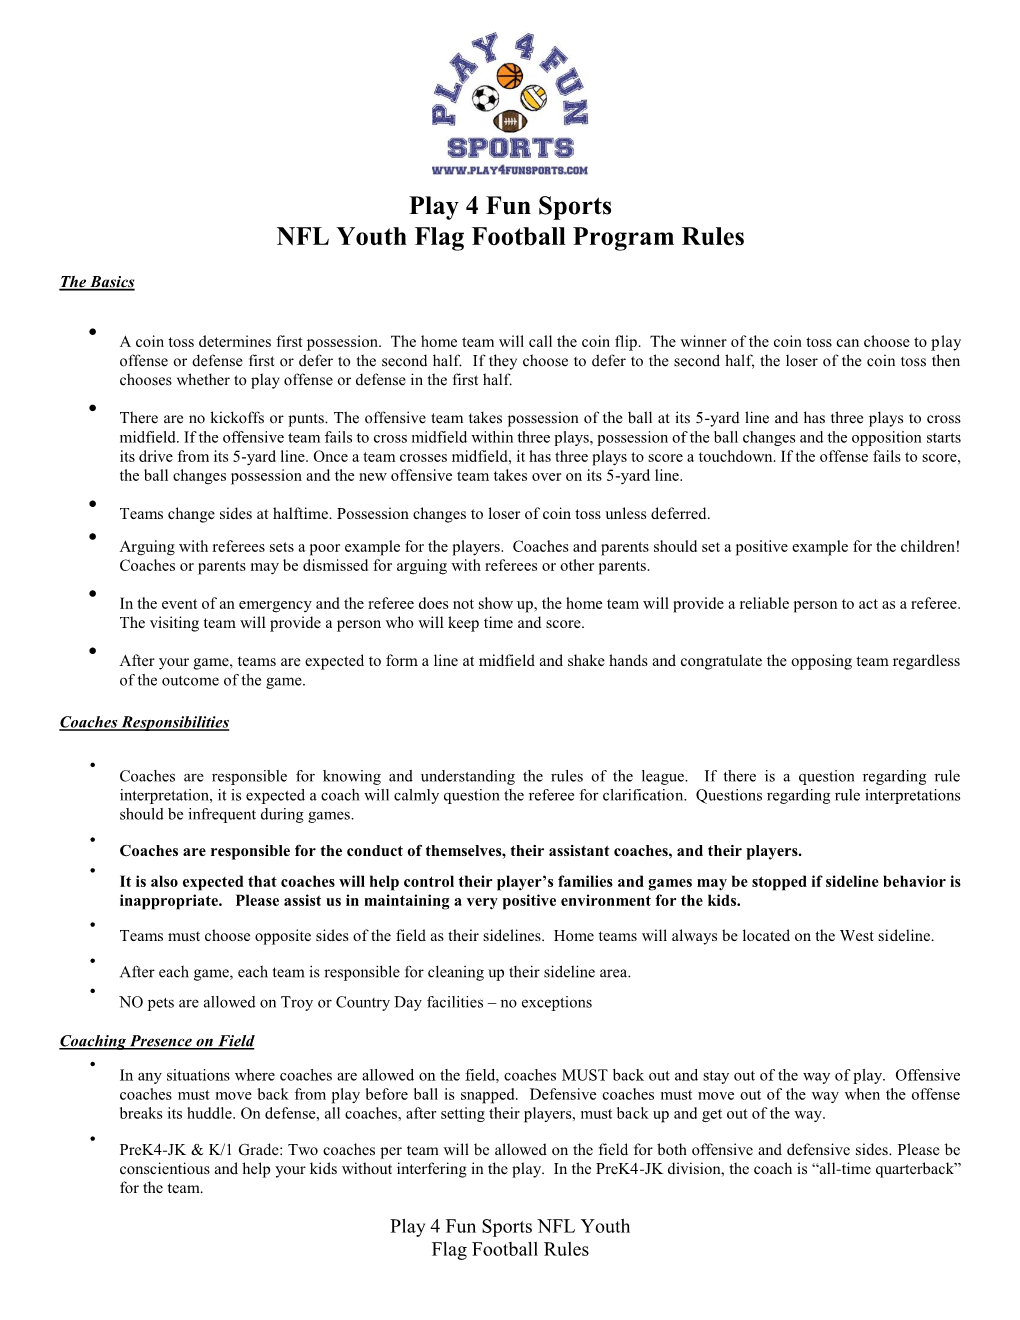 Play 4 Fun Sports NFL Youth Flag Football Program Rules